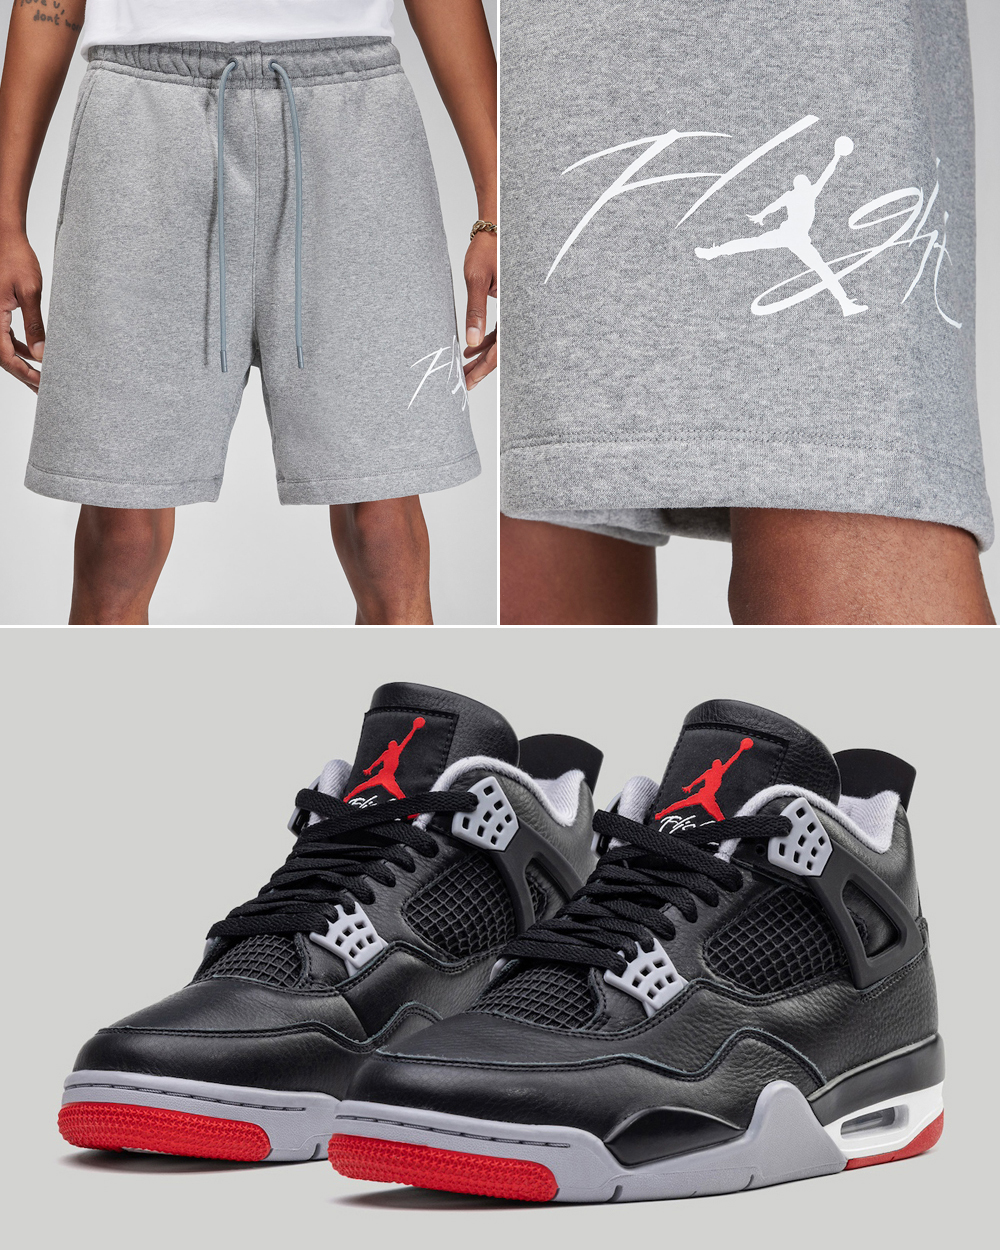 Air-Jordan-4-Bred-Reimagined-Shorts